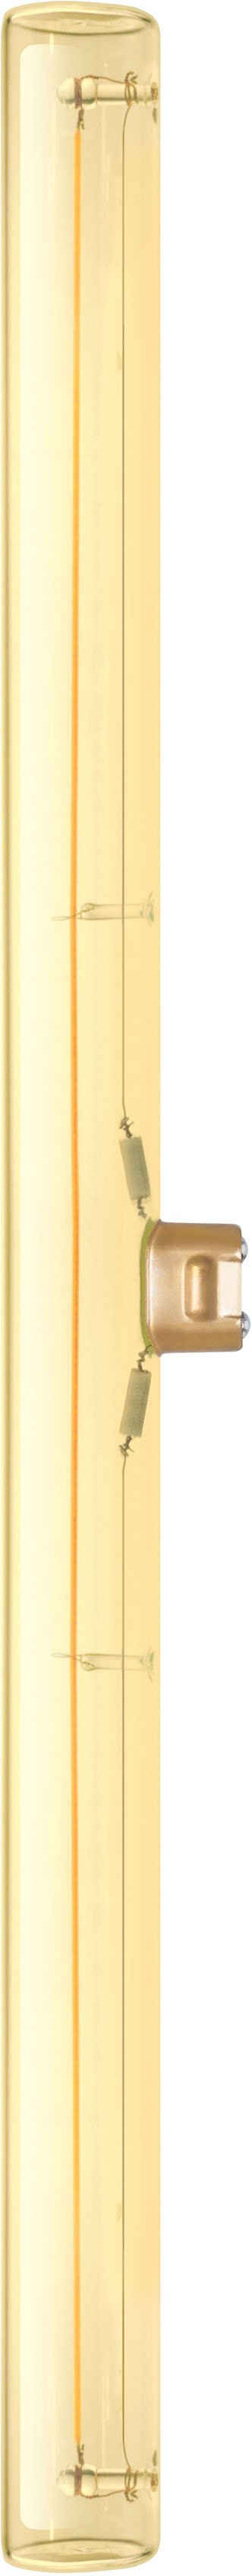 SEGULA LED-Leuchtmittel LED Linienlampe S14d 500mm gold, S14d, Warmweiß, dimmbar, Linienlampe, S14d, 500mm, gold